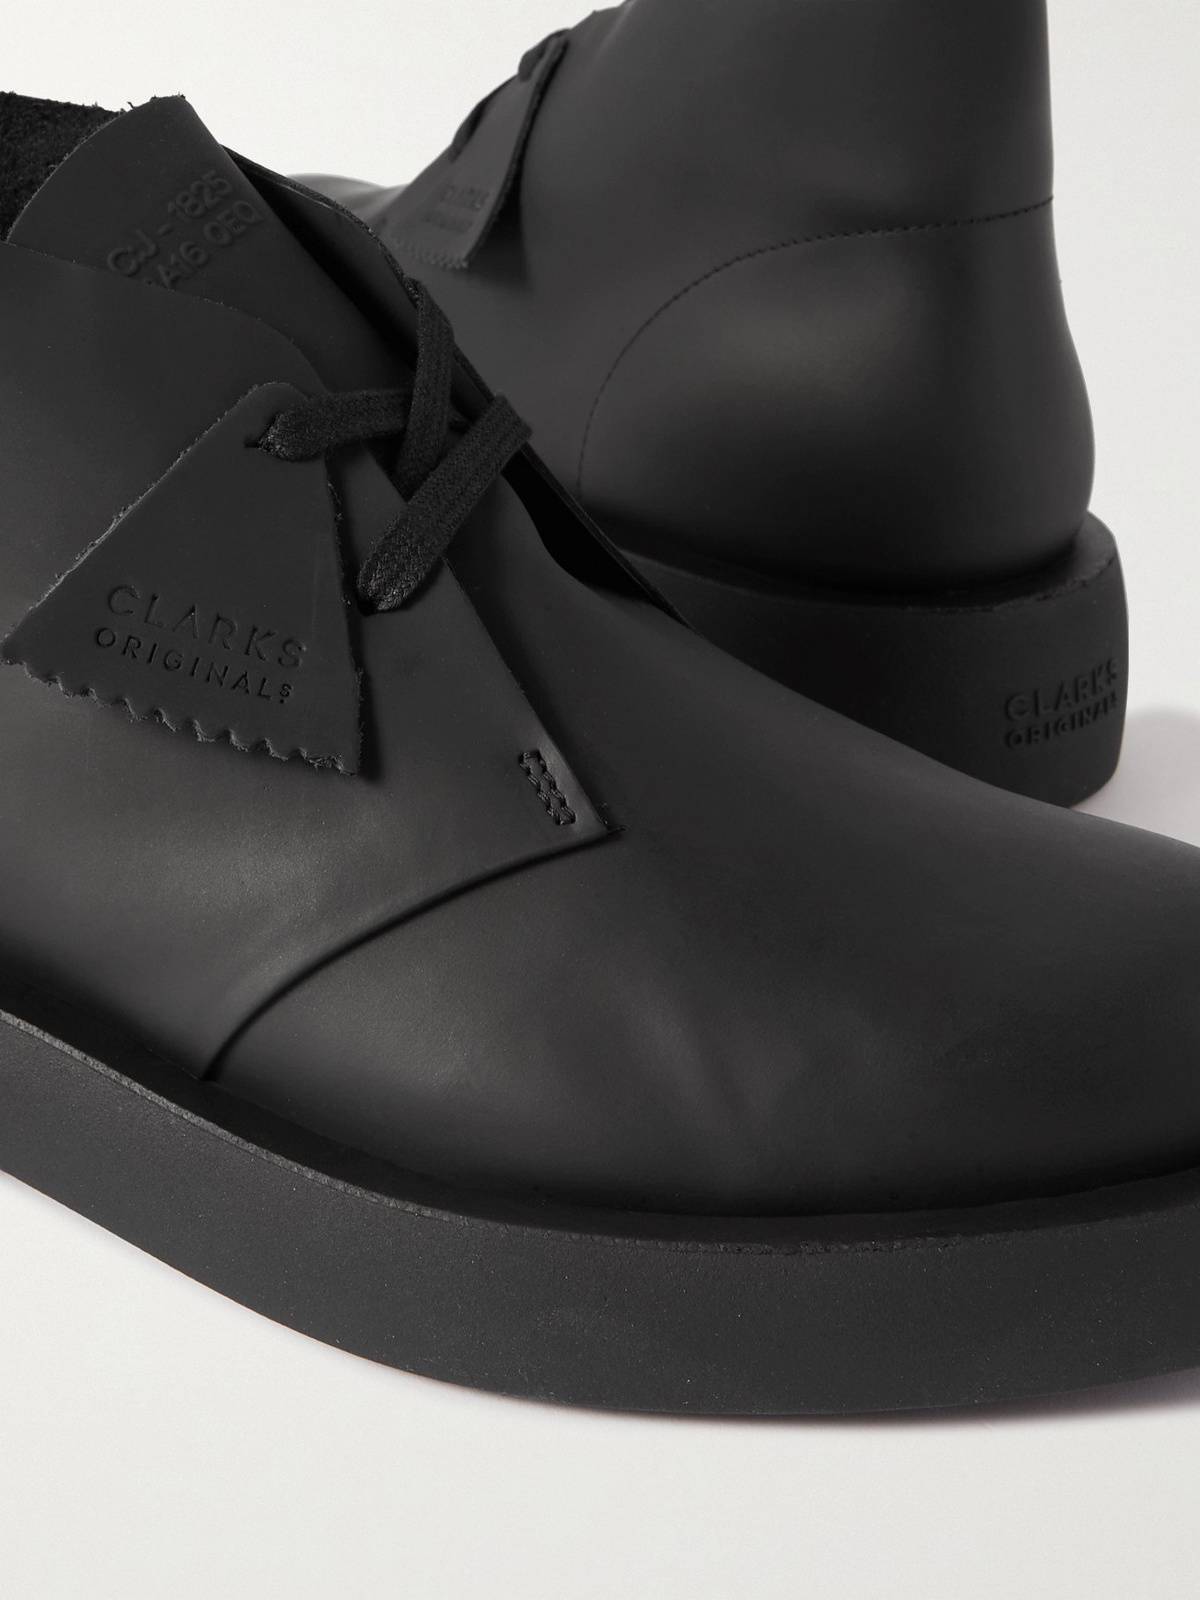 CLARKS ORIGINALS - Mileno Matte-Leather Desert Boots - - UK 7 Clarks Originals